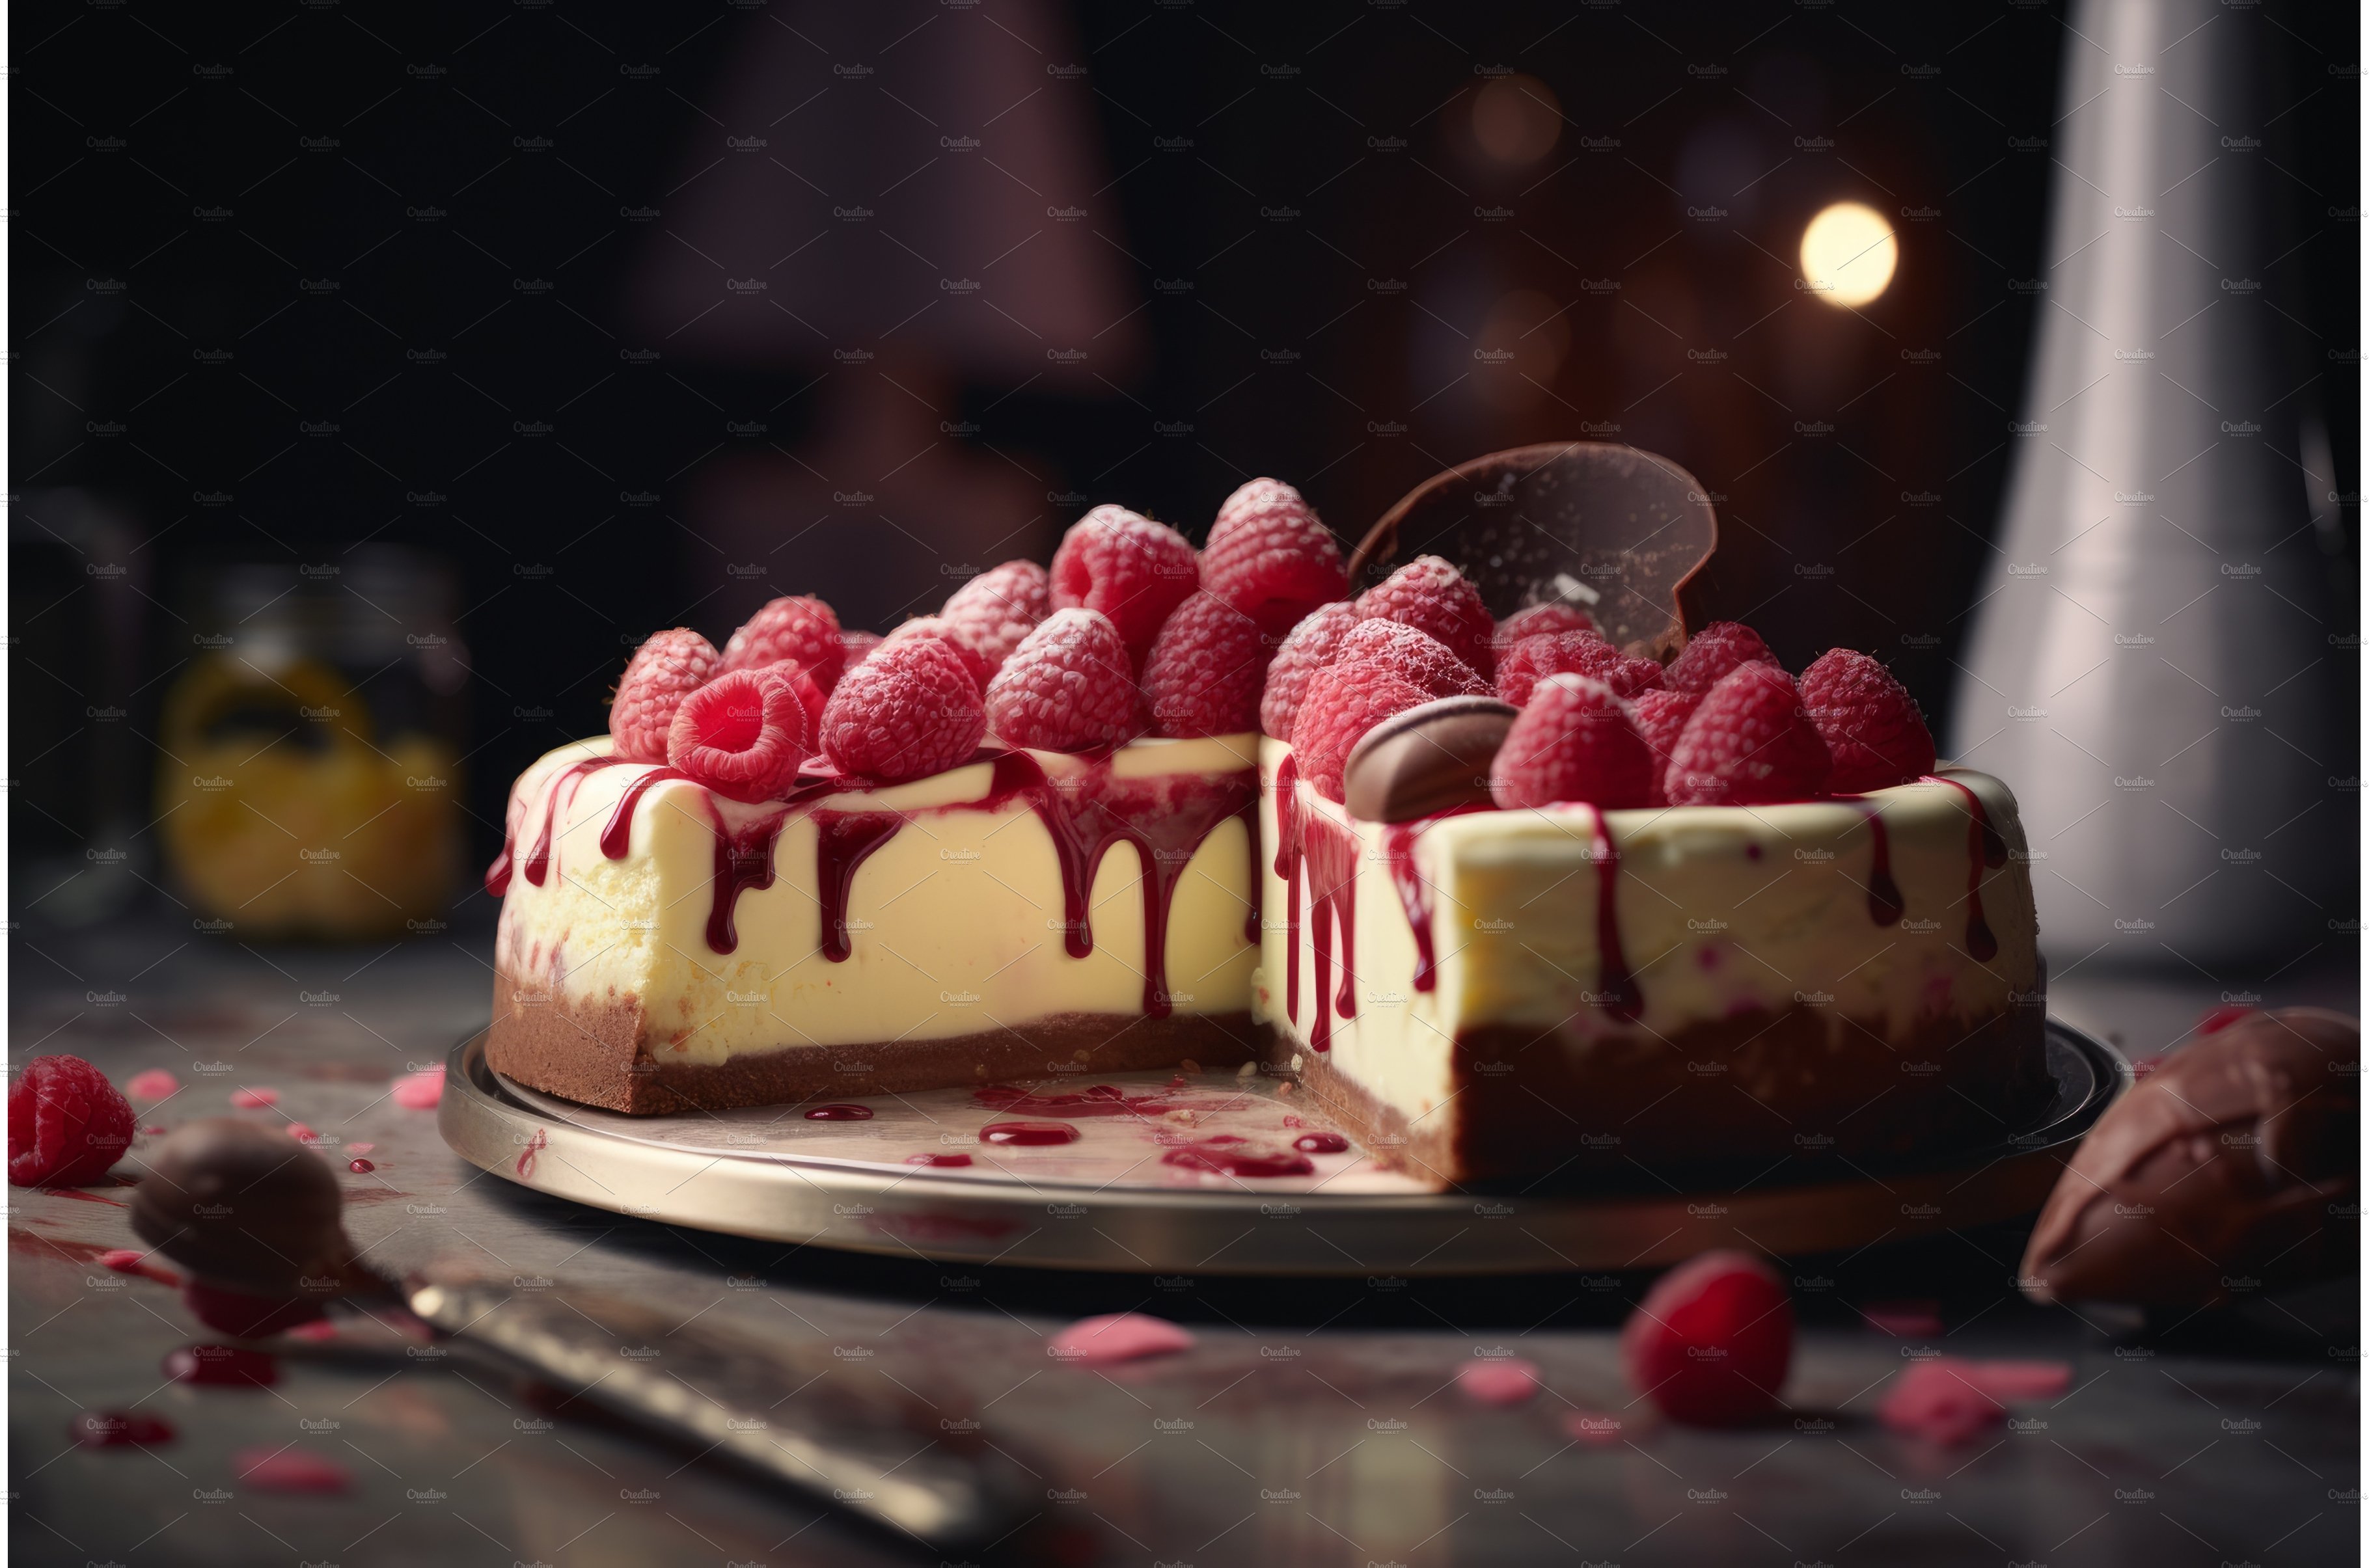 Chocolate raspberry cheesecake cover image.